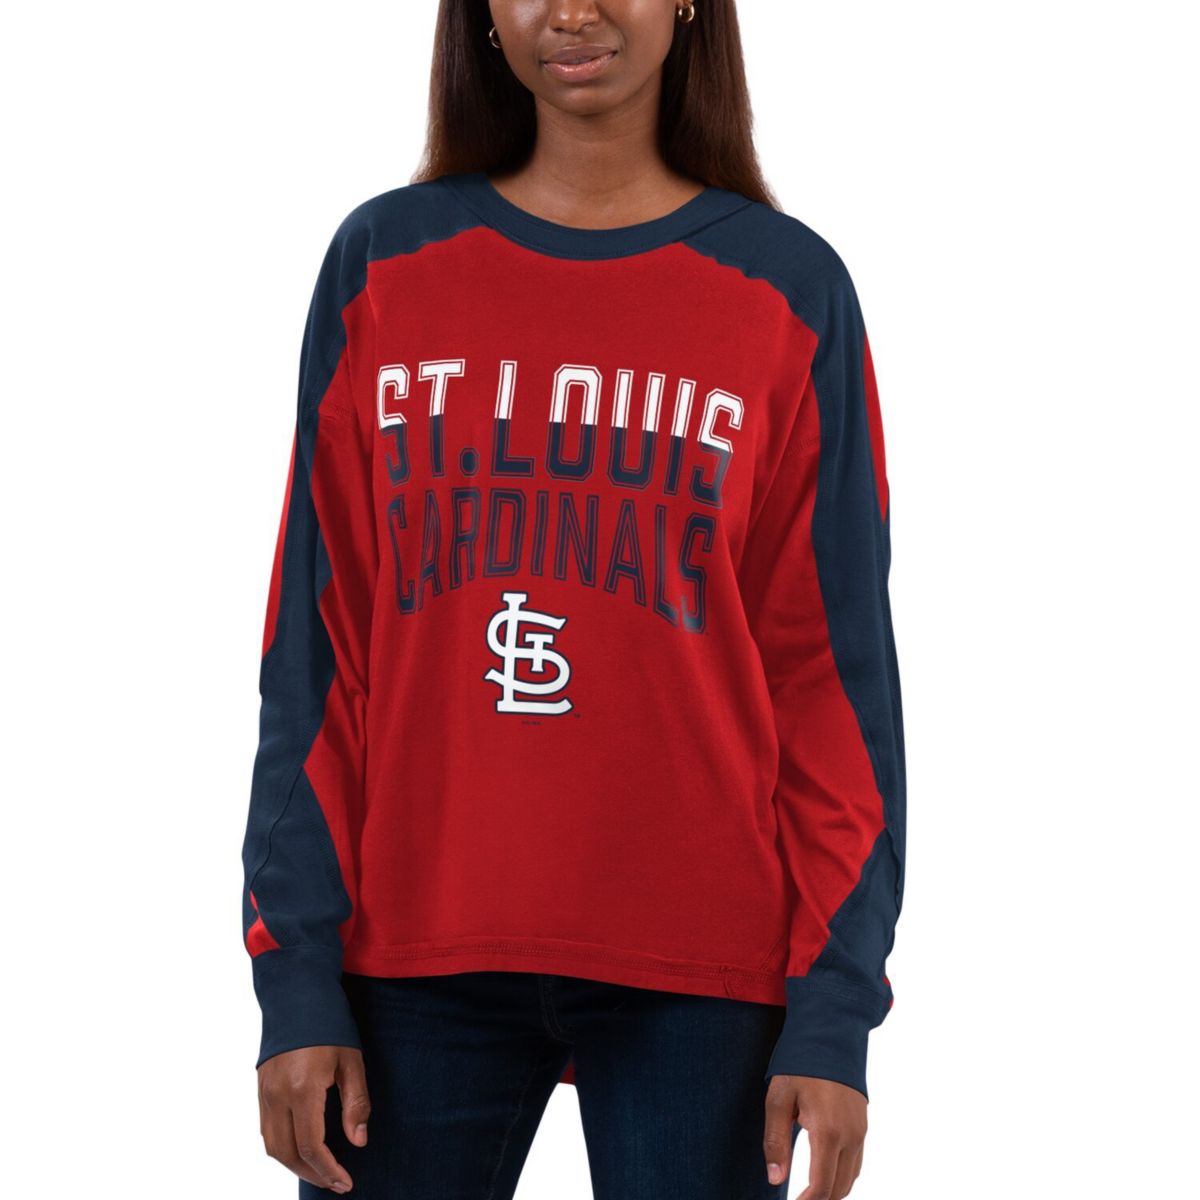 Женская футболка G-III 4Her by Carl Banks Красная/темно-синяя футболка St. Louis Cardinals Smash с длинным рукавом реглан In The Style